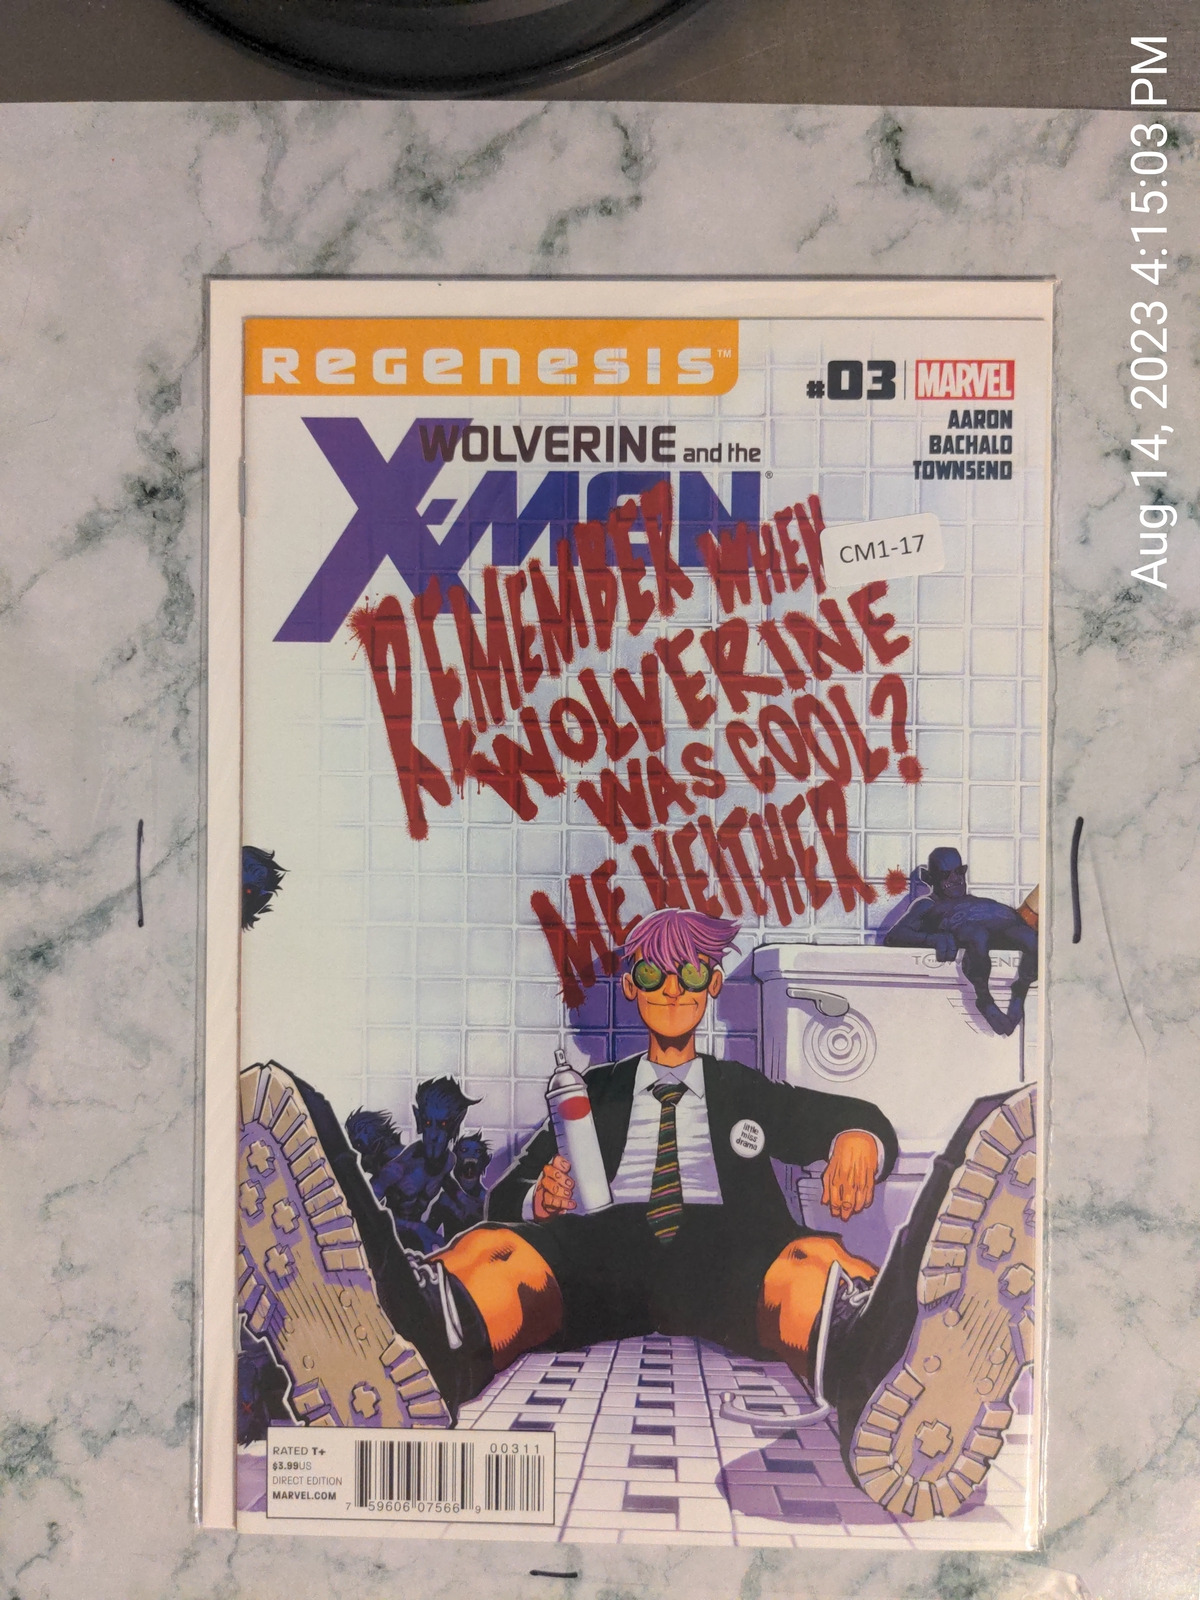 WOLVERINE & THE X-MEN #3 VOL. 1 9.4 MARVEL COMIC BOOK CM1-17